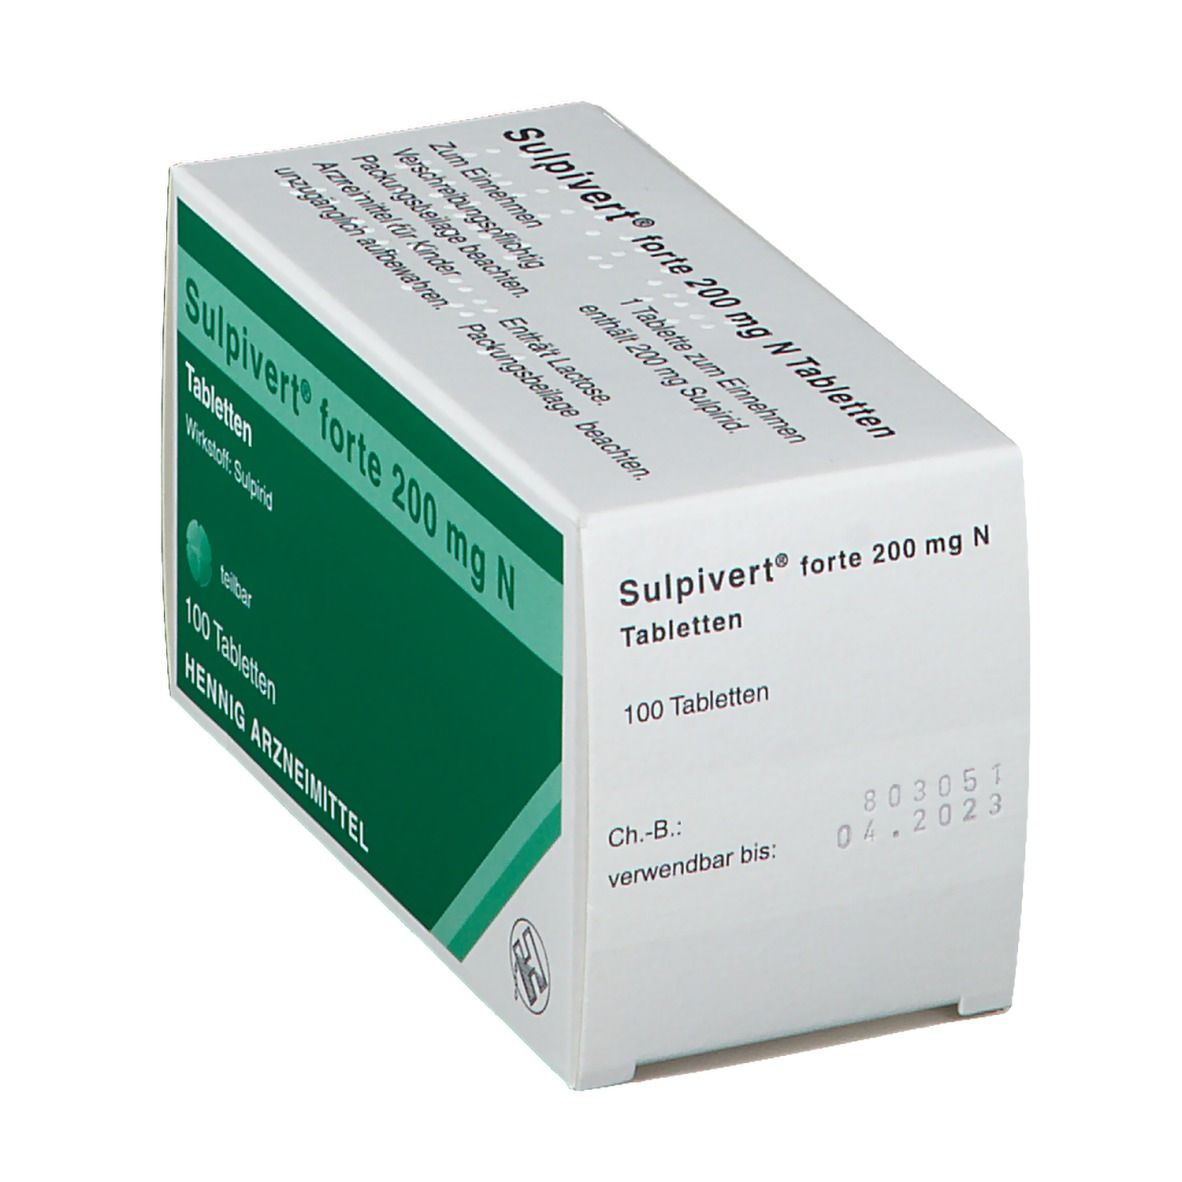 Sulpivert® forte 200 mg N